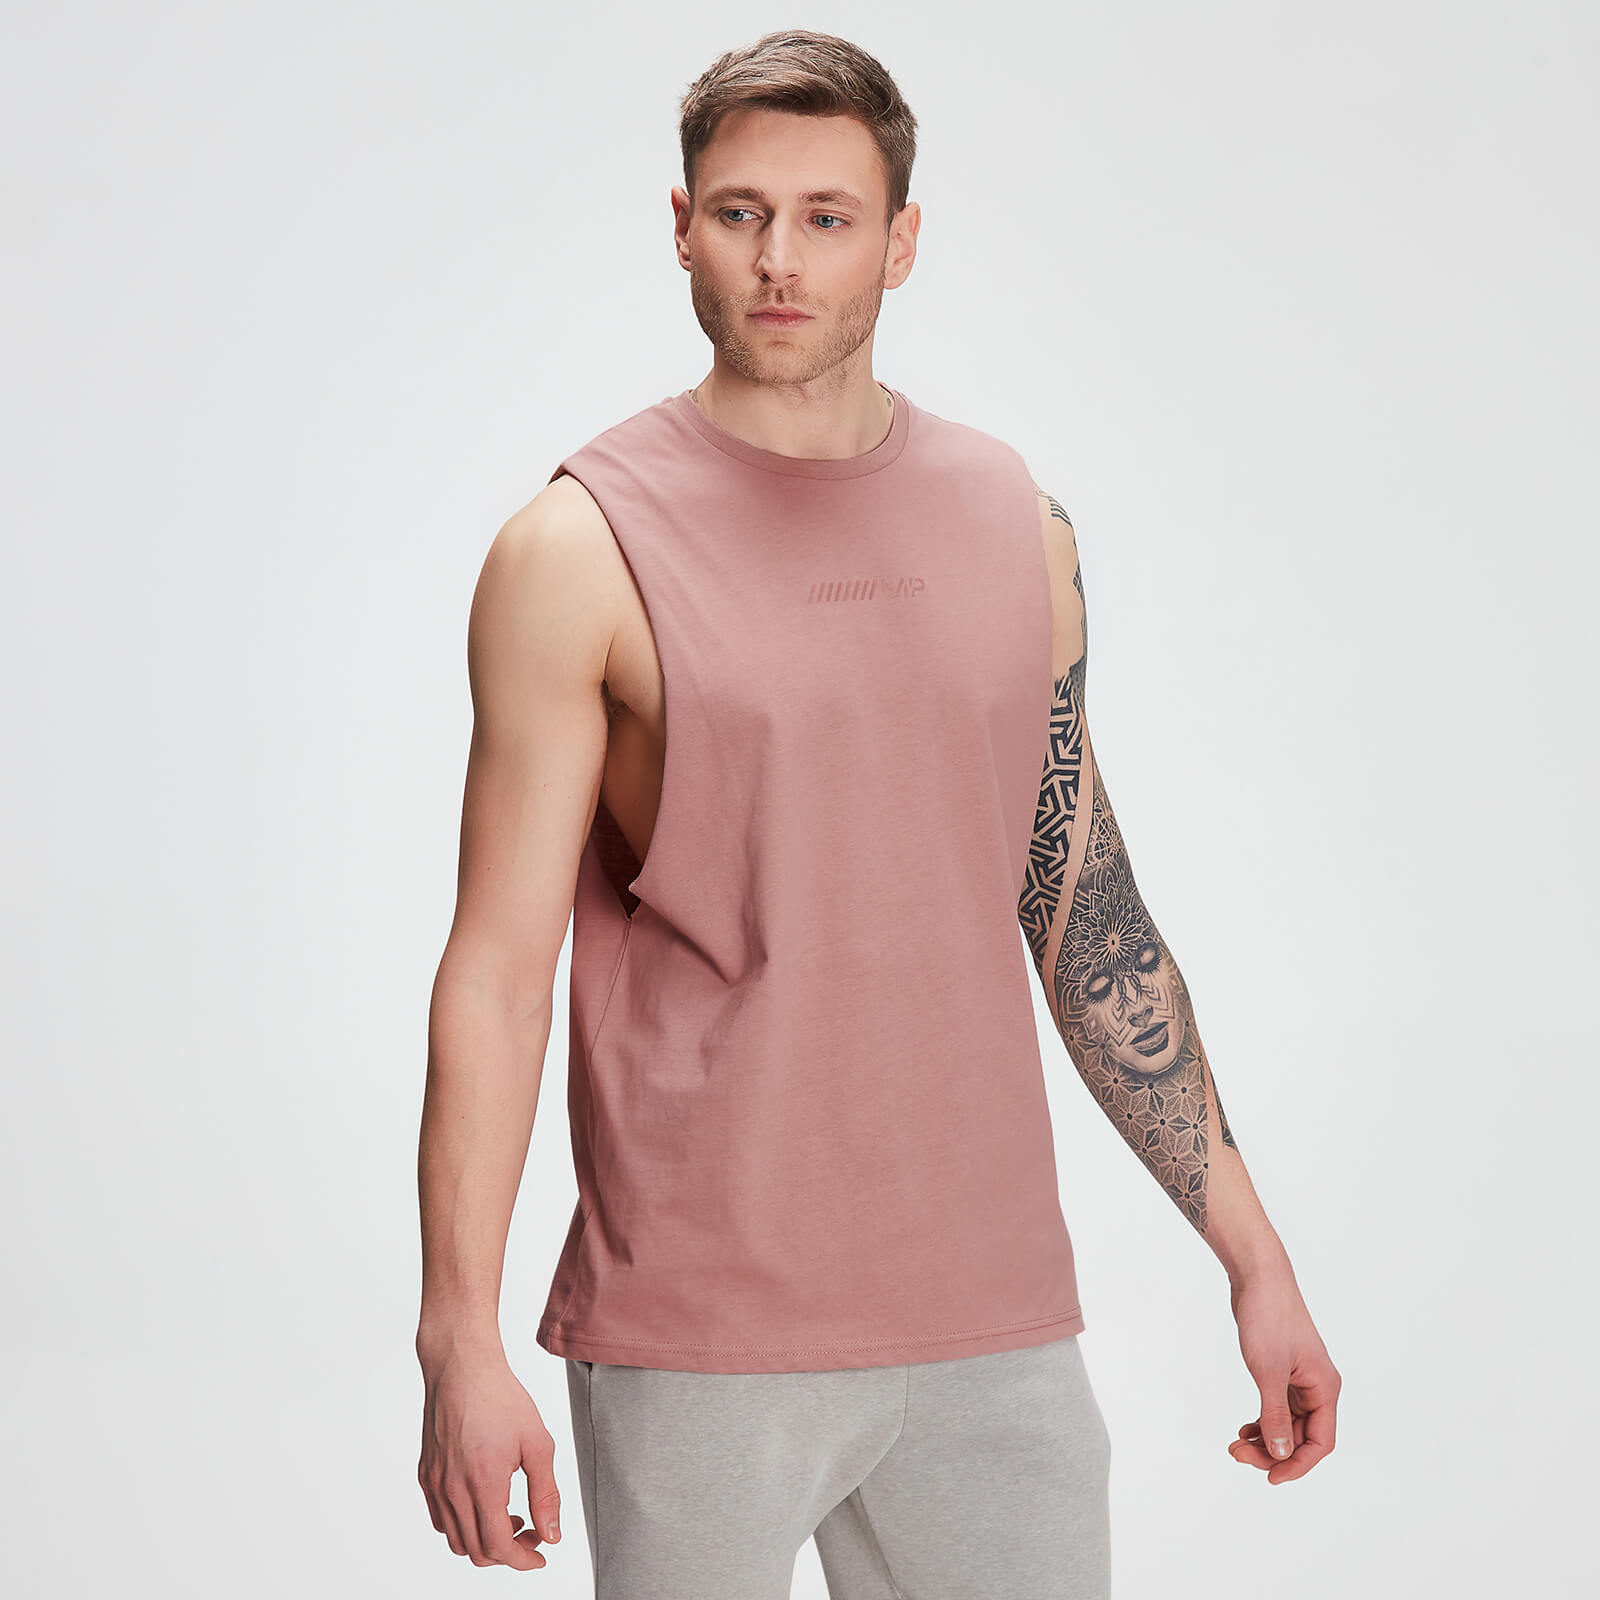 Mp Camiseta sin mangas Tonal Graphic para hombre de  - Rosa lavado - M